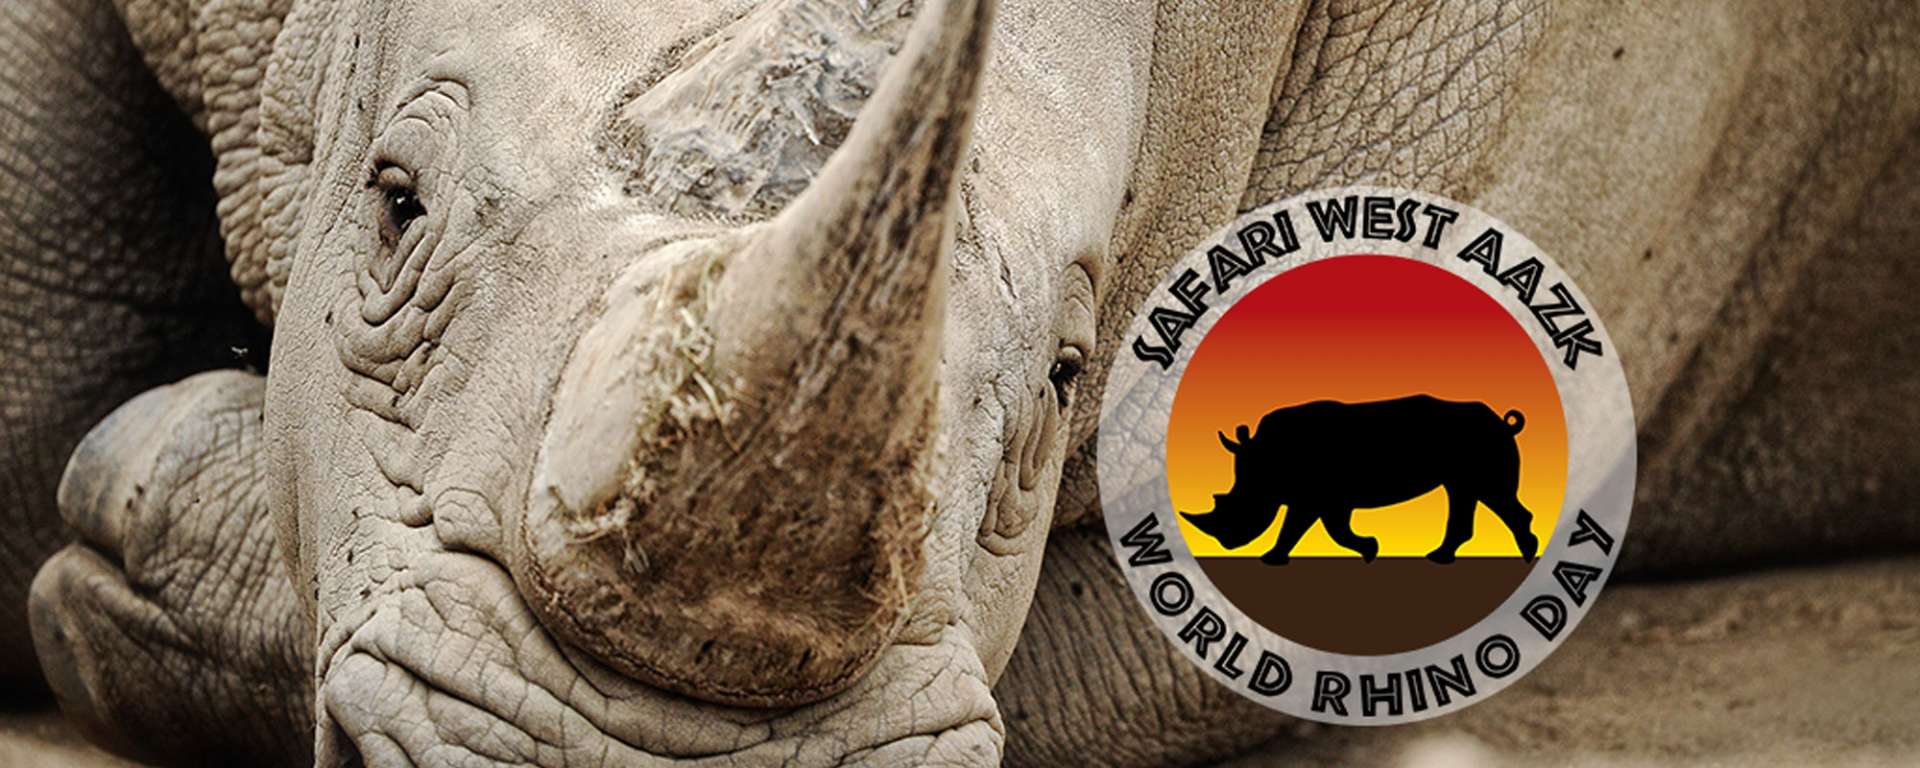 Safari West Logo - Nail it for Rhinos!